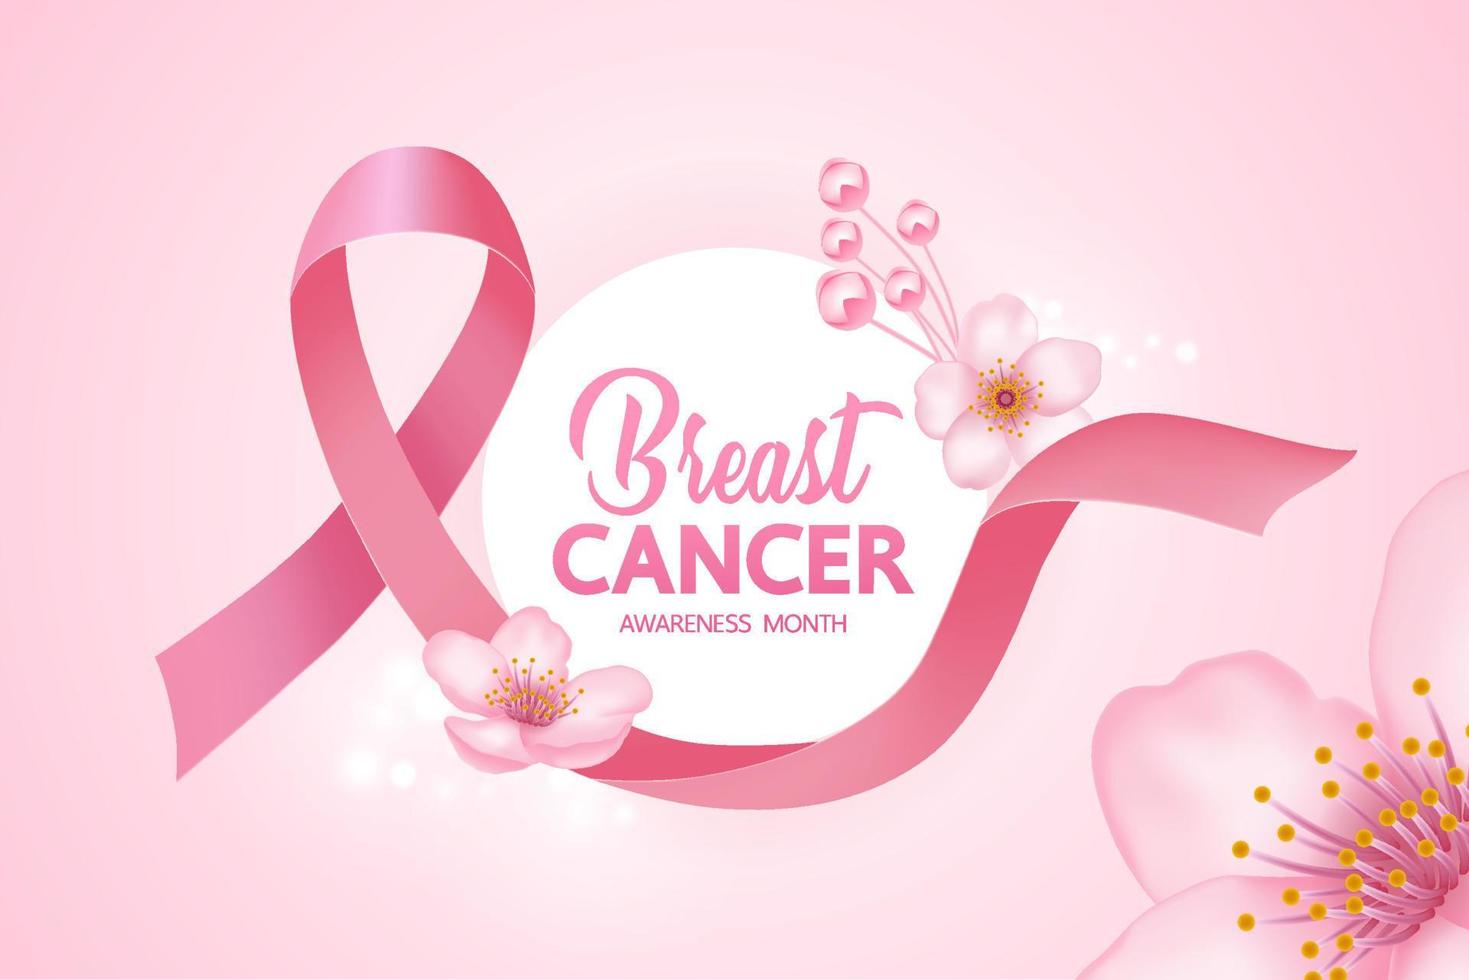 rosa band av bröst cancer medvetenhet vektor illustration.